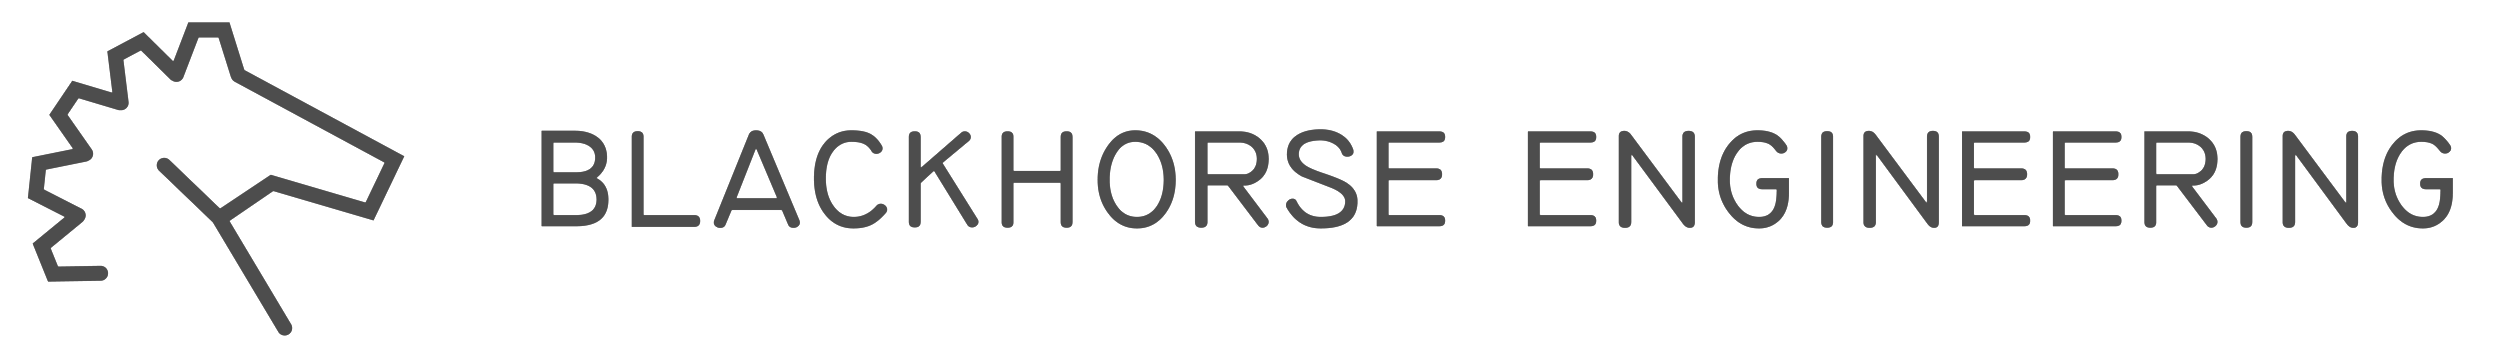 Blackhorse Engineering